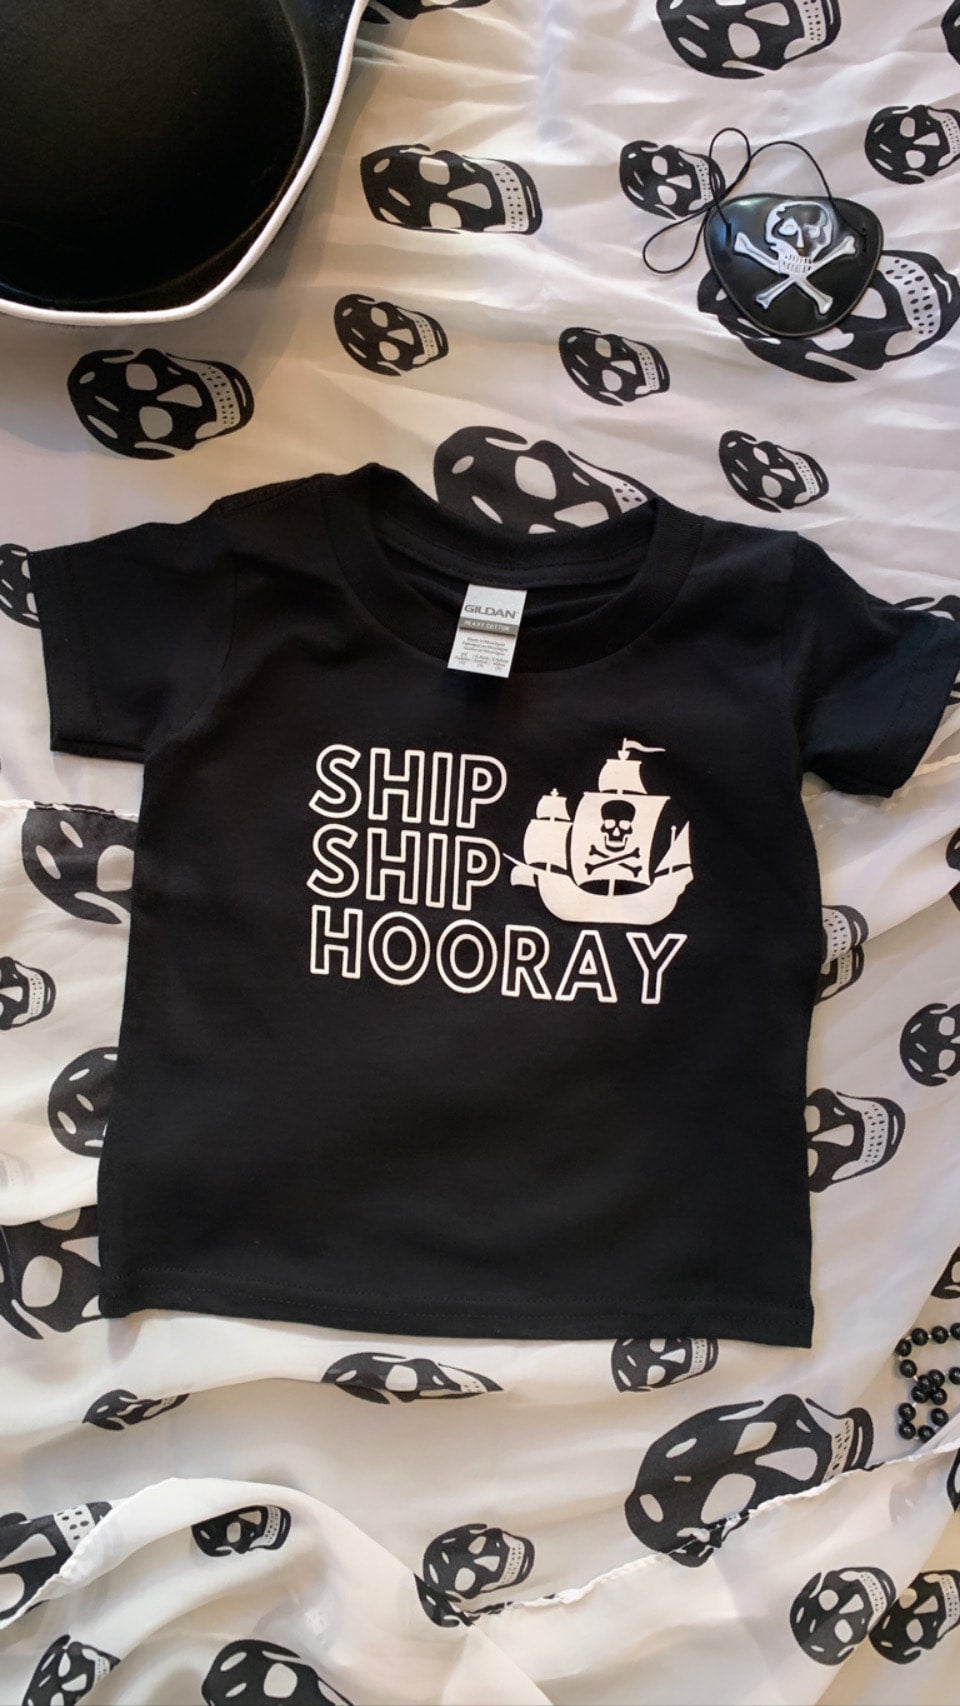 TPA Pirate Ship Tampa logo shirt- Men's Crew Neck, Gasparilla